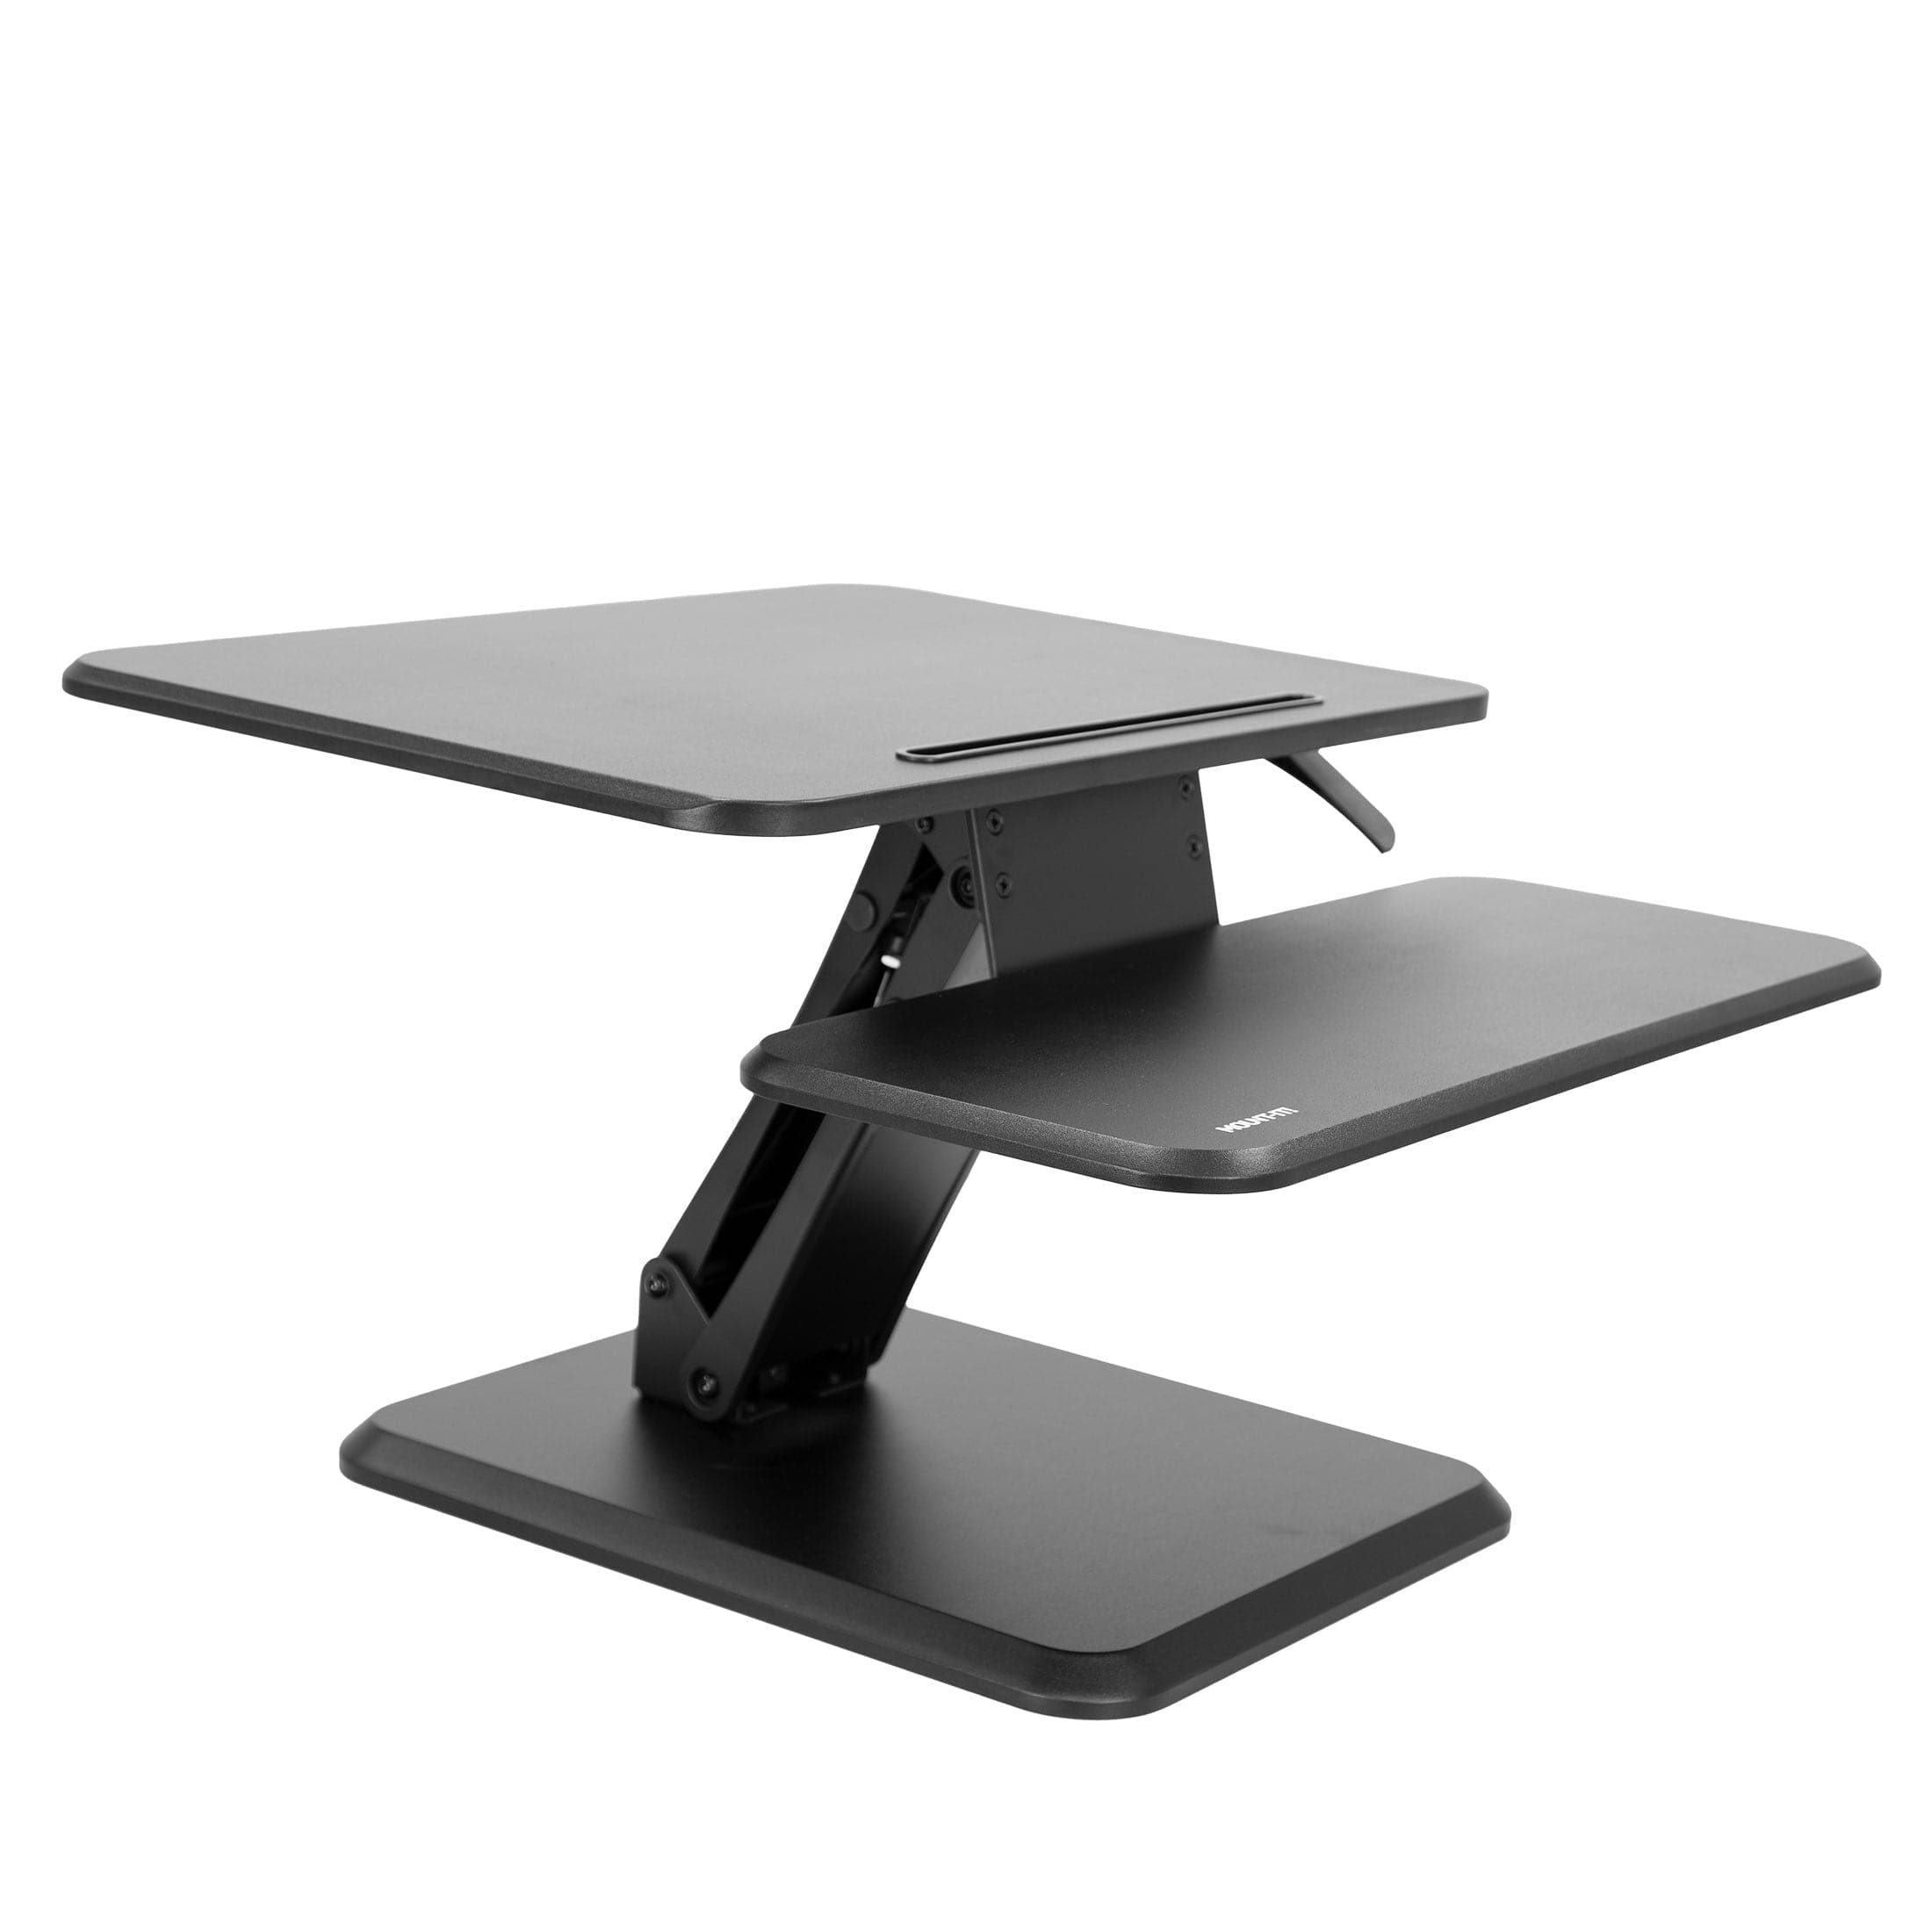 Mount-it! Adjustable Laptop Stand, Portable Standing Desk